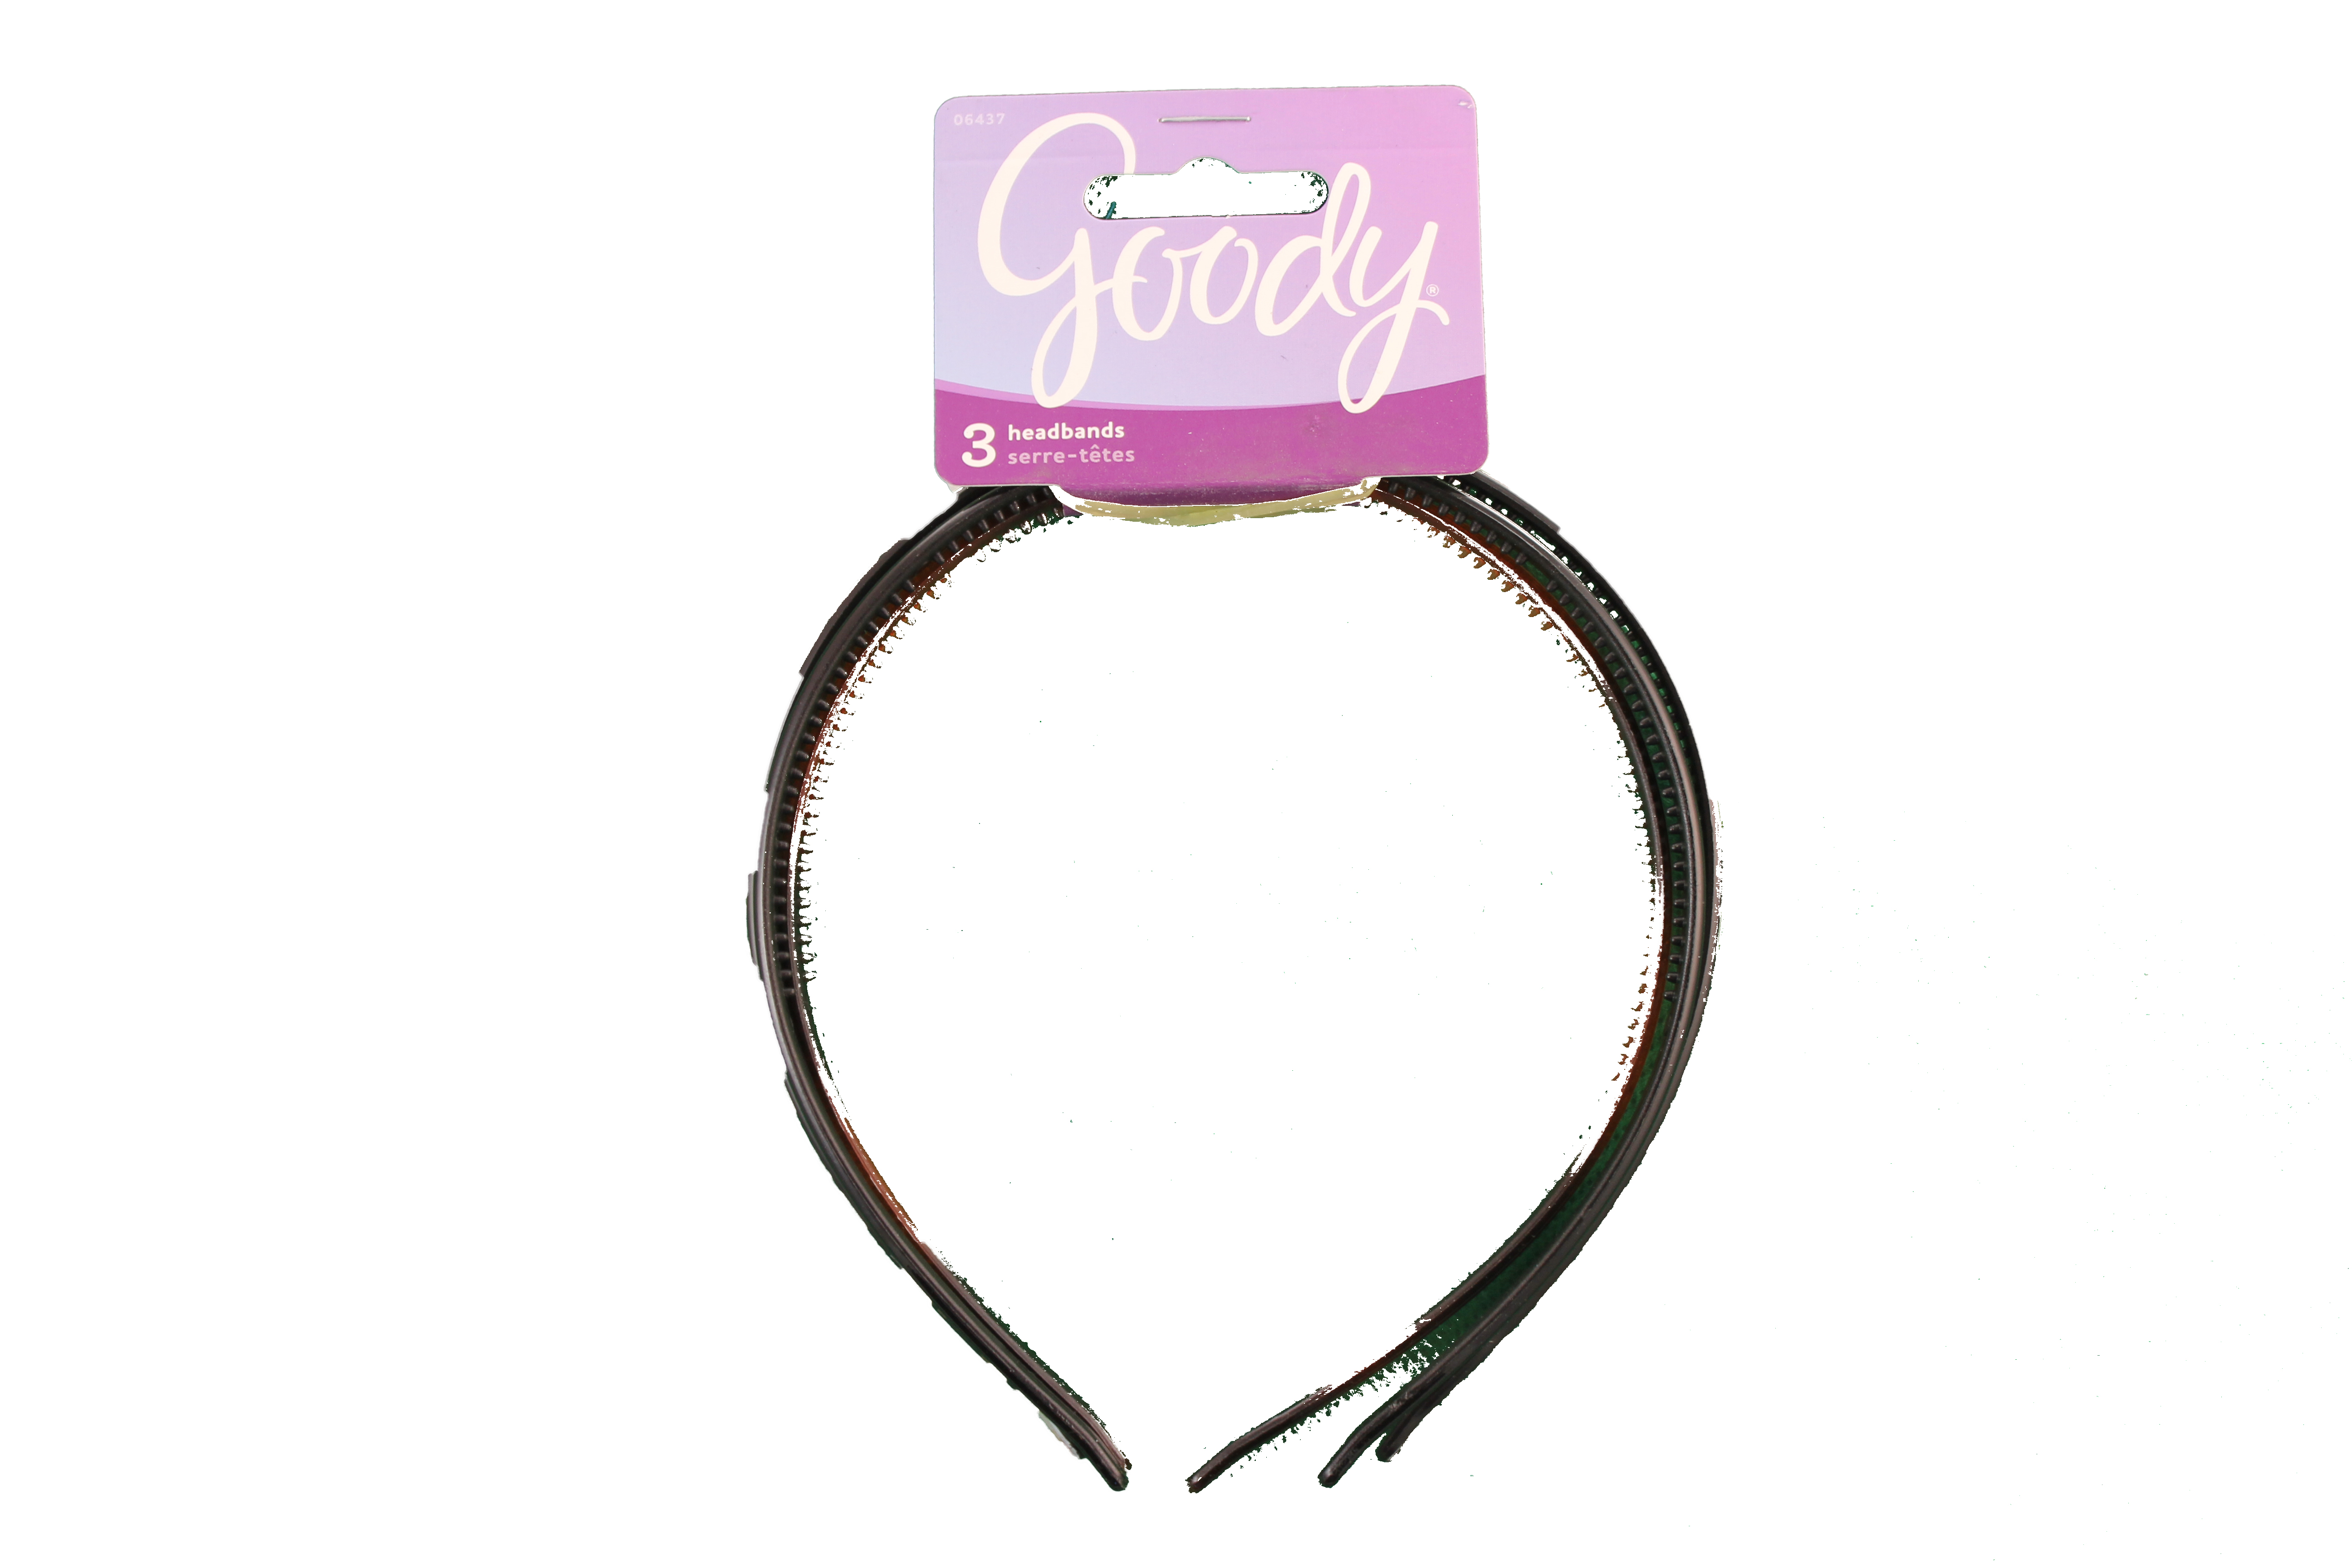 Goody Headbands With Teeth Cheetah Print Mix, 3 Per Card UPC:041457064375 Pack:72/3 - Click Image to Close